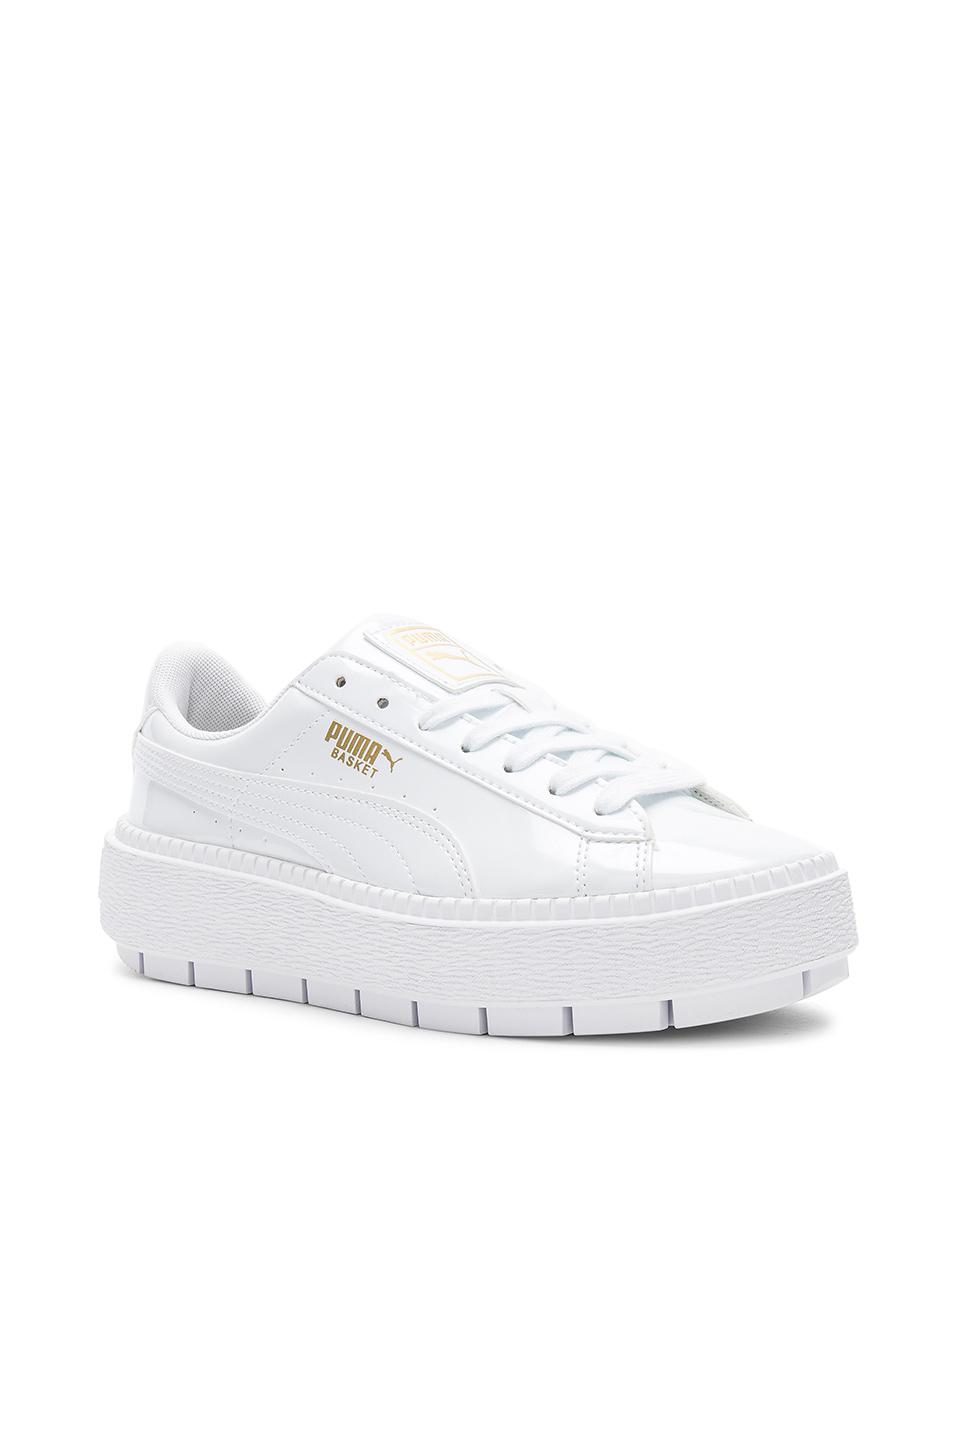 etika puma white platform sneakers 